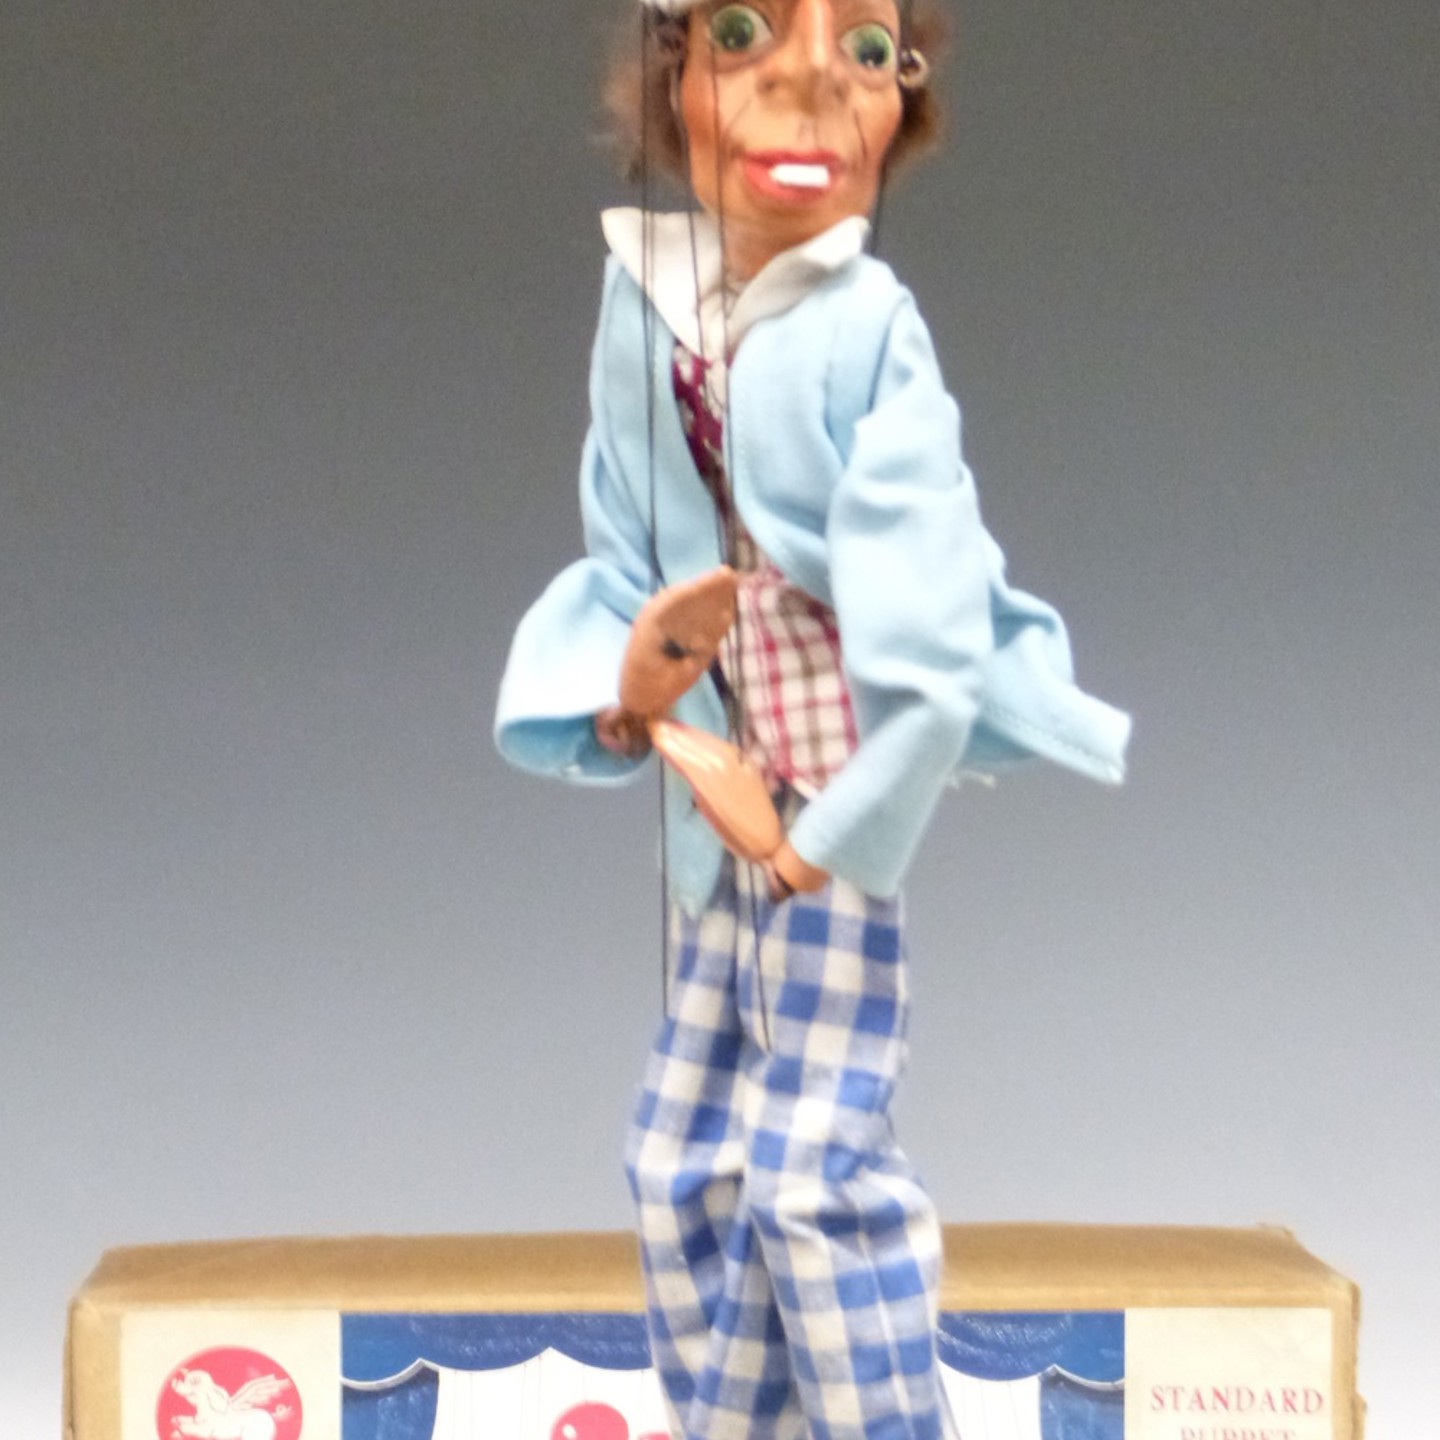 Pelham Puppets SL Mad Hatter Puppet From Alice's Adventures In Wonderland £850